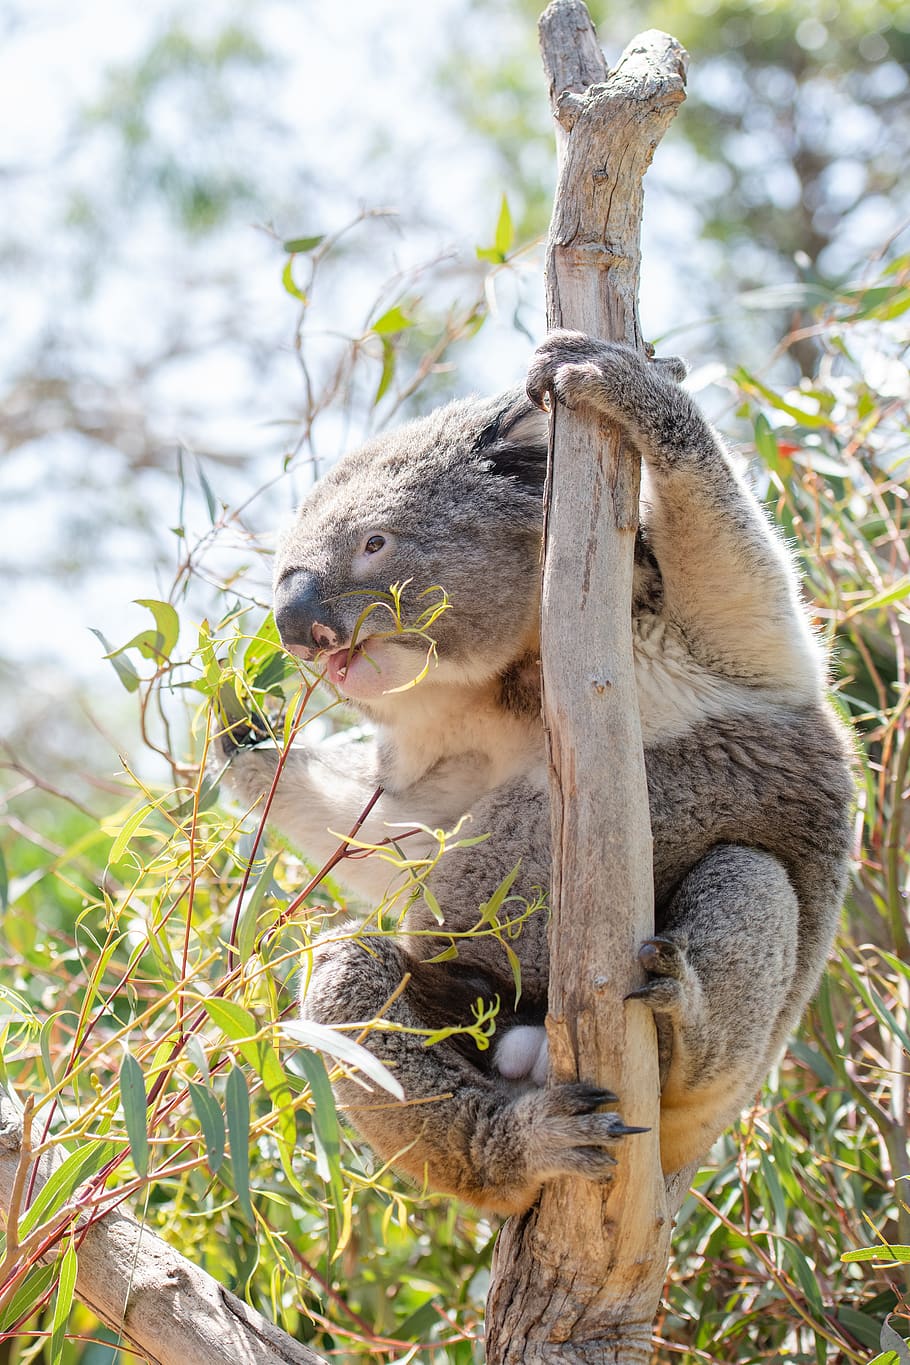 koala, marsupial, herbivore, arboreal, wildlife, australian, australia, animal, cute, nature